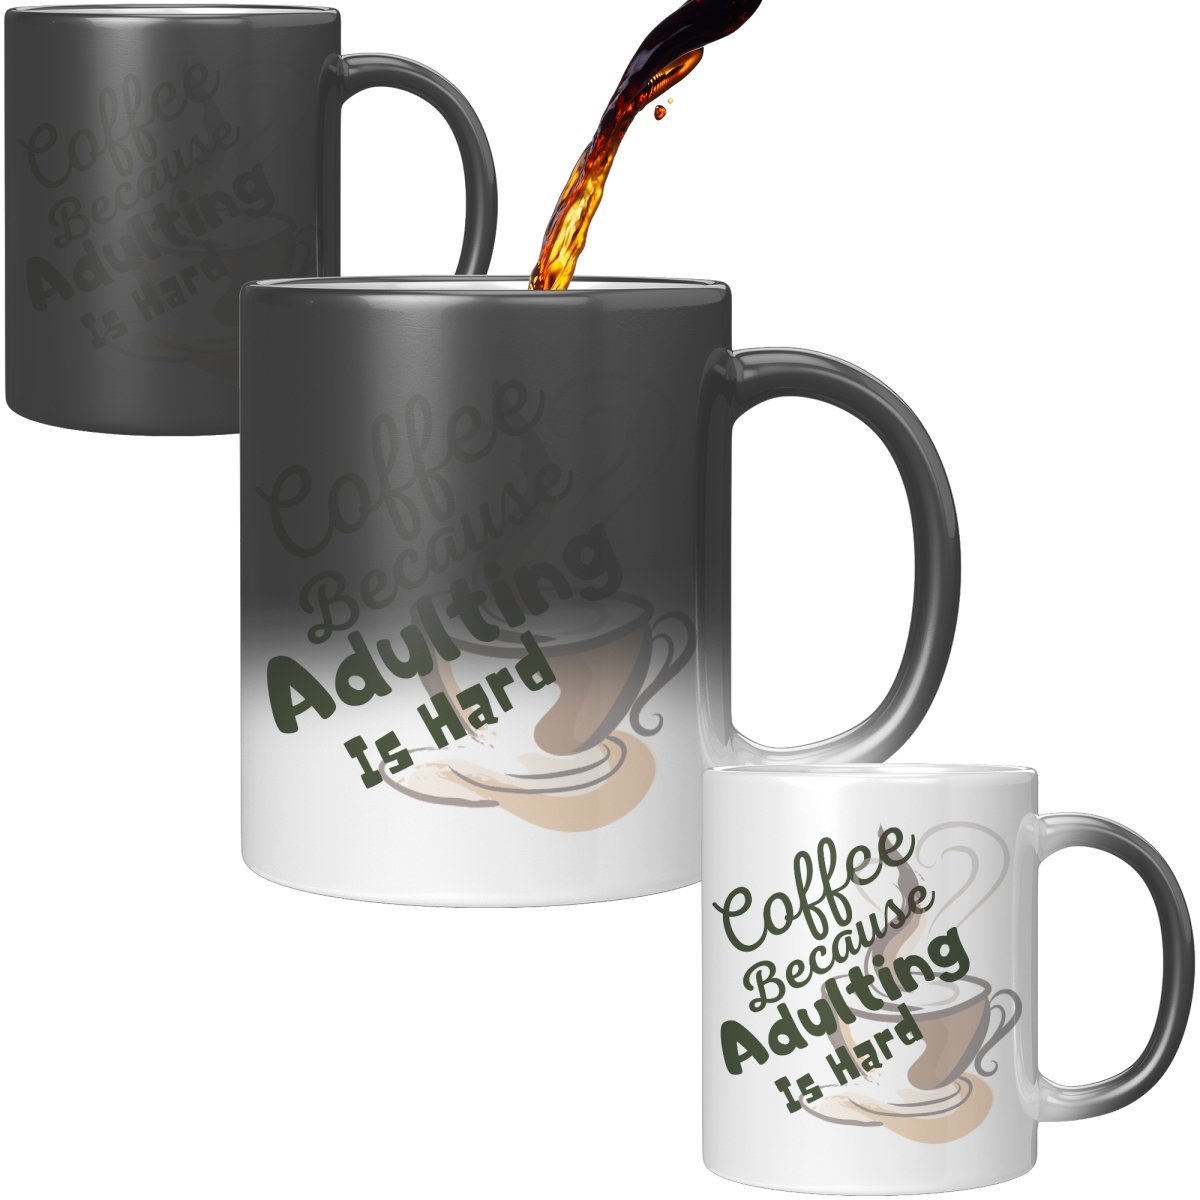 Coffee Because Adulting is Hard Ceramic Mugs, - MemesRetail.com